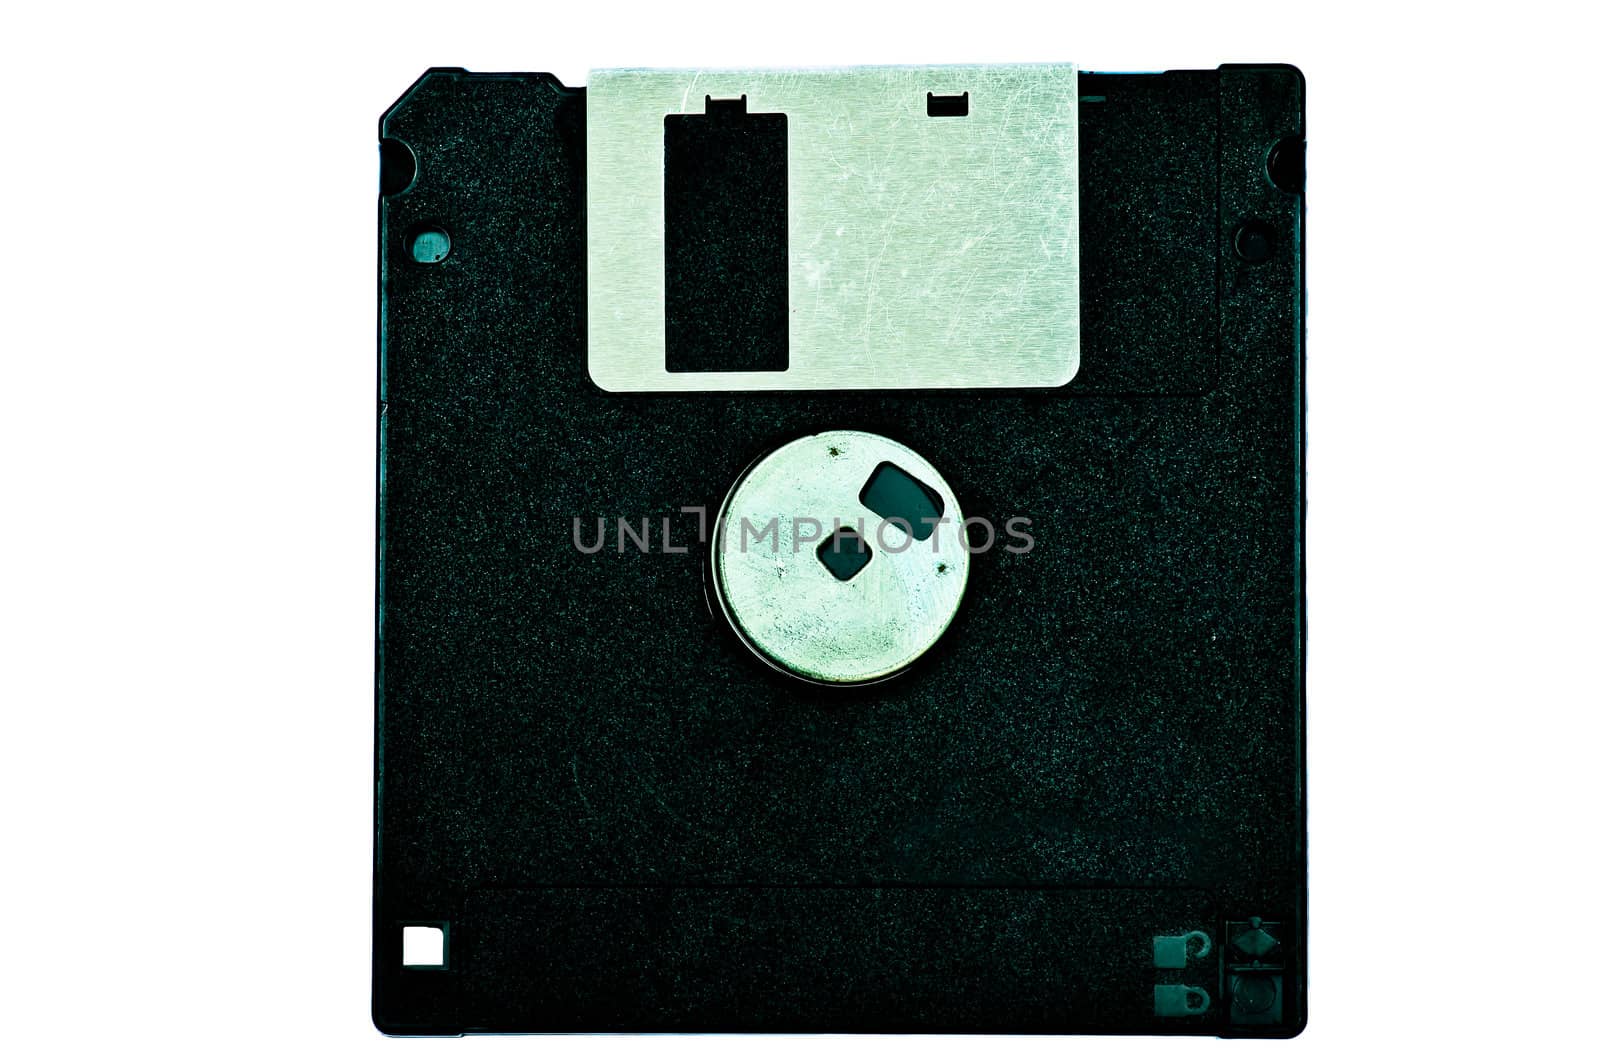 Black diskette